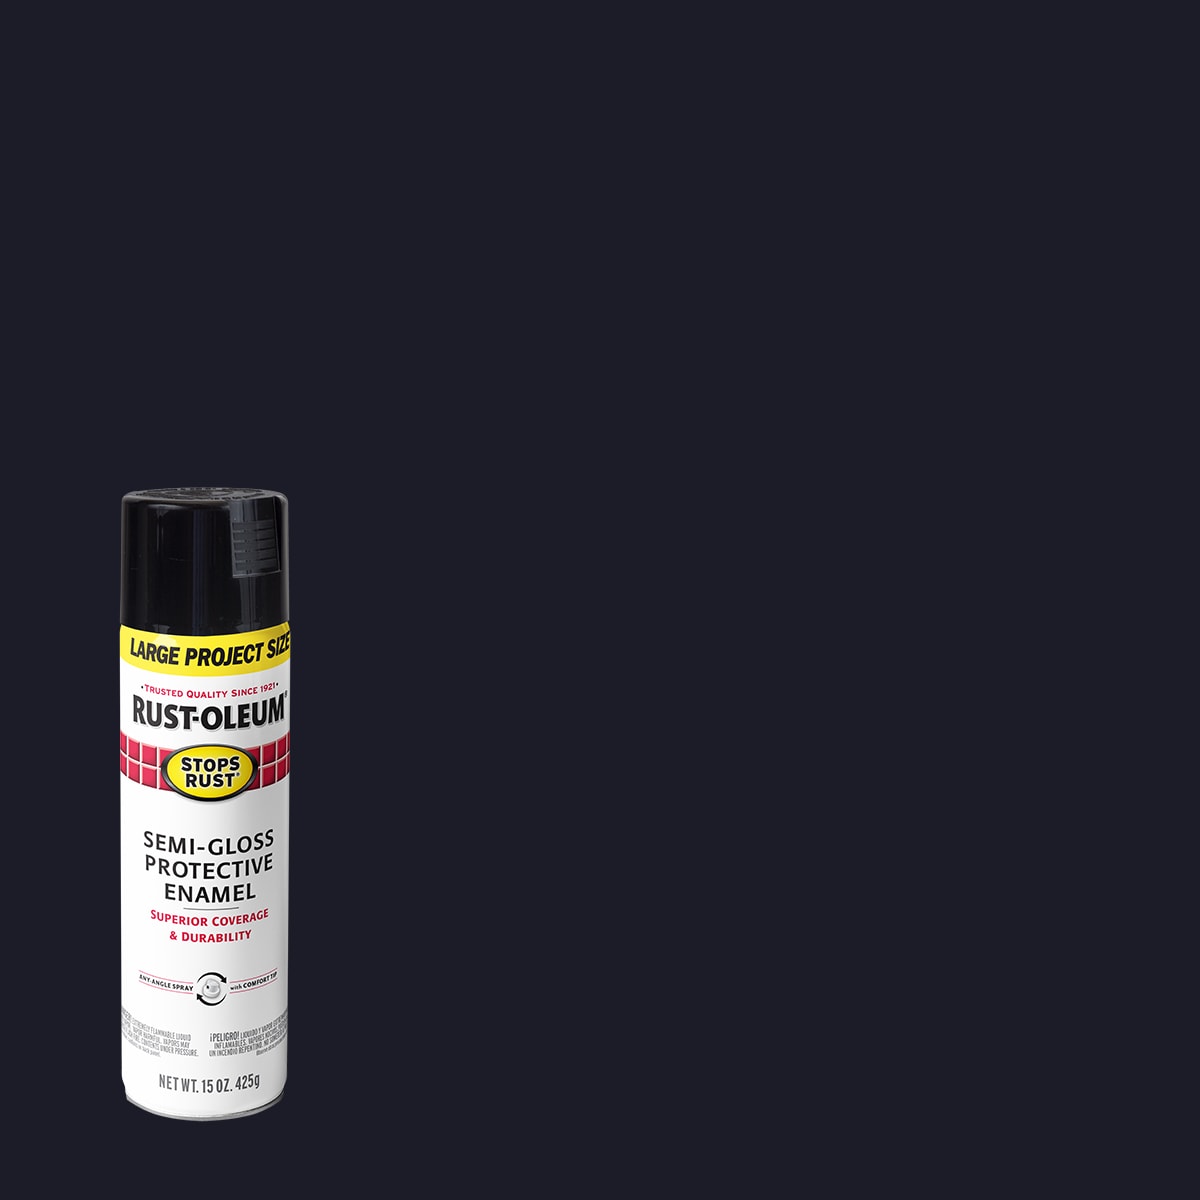 Rust-Oleum Painter's Touch 2x 12 oz. Semi-Gloss Black General Purpose Spray Paint (6-pack)